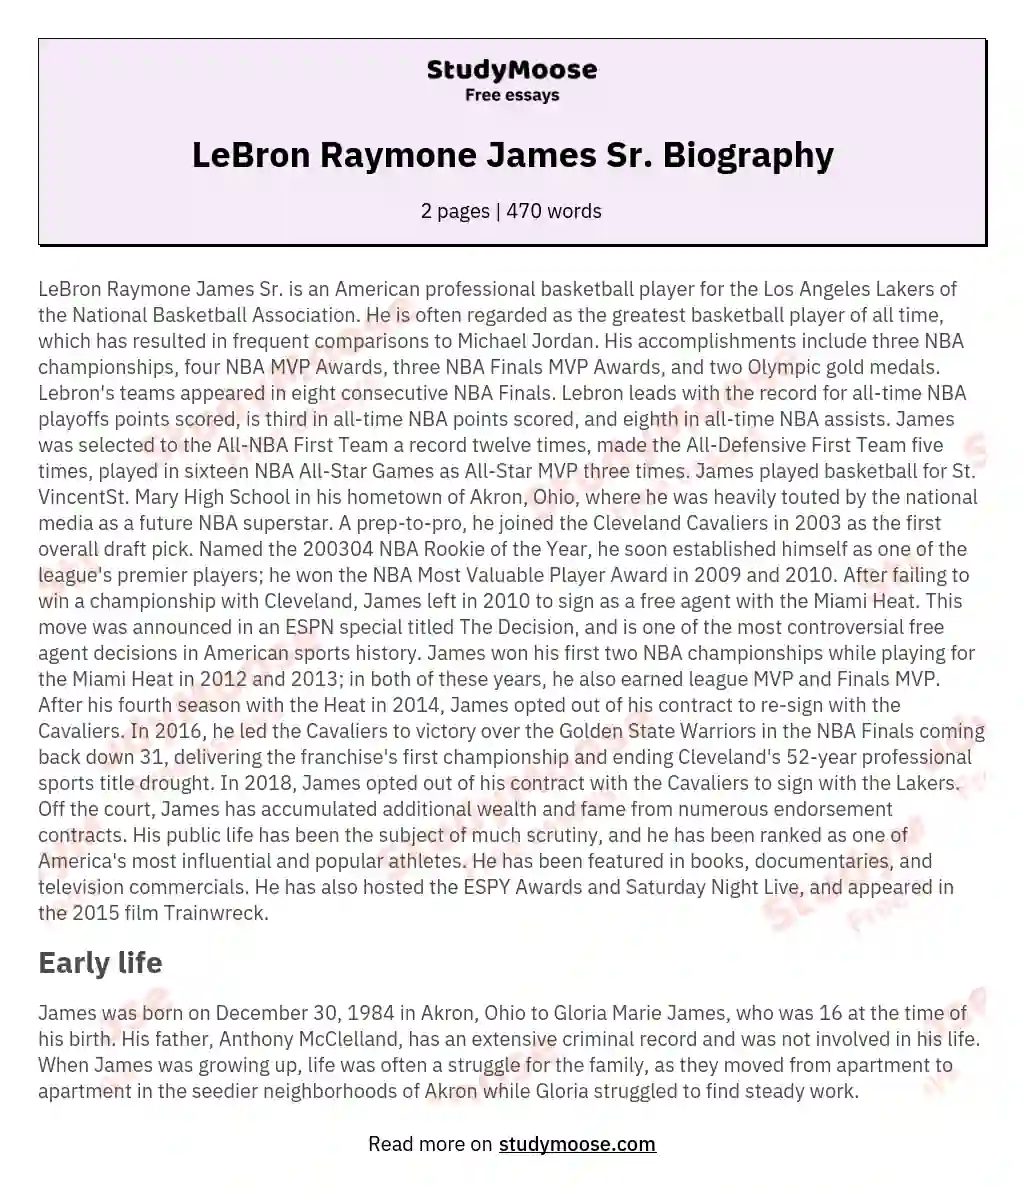 LeBron Raymone James Sr. Biography